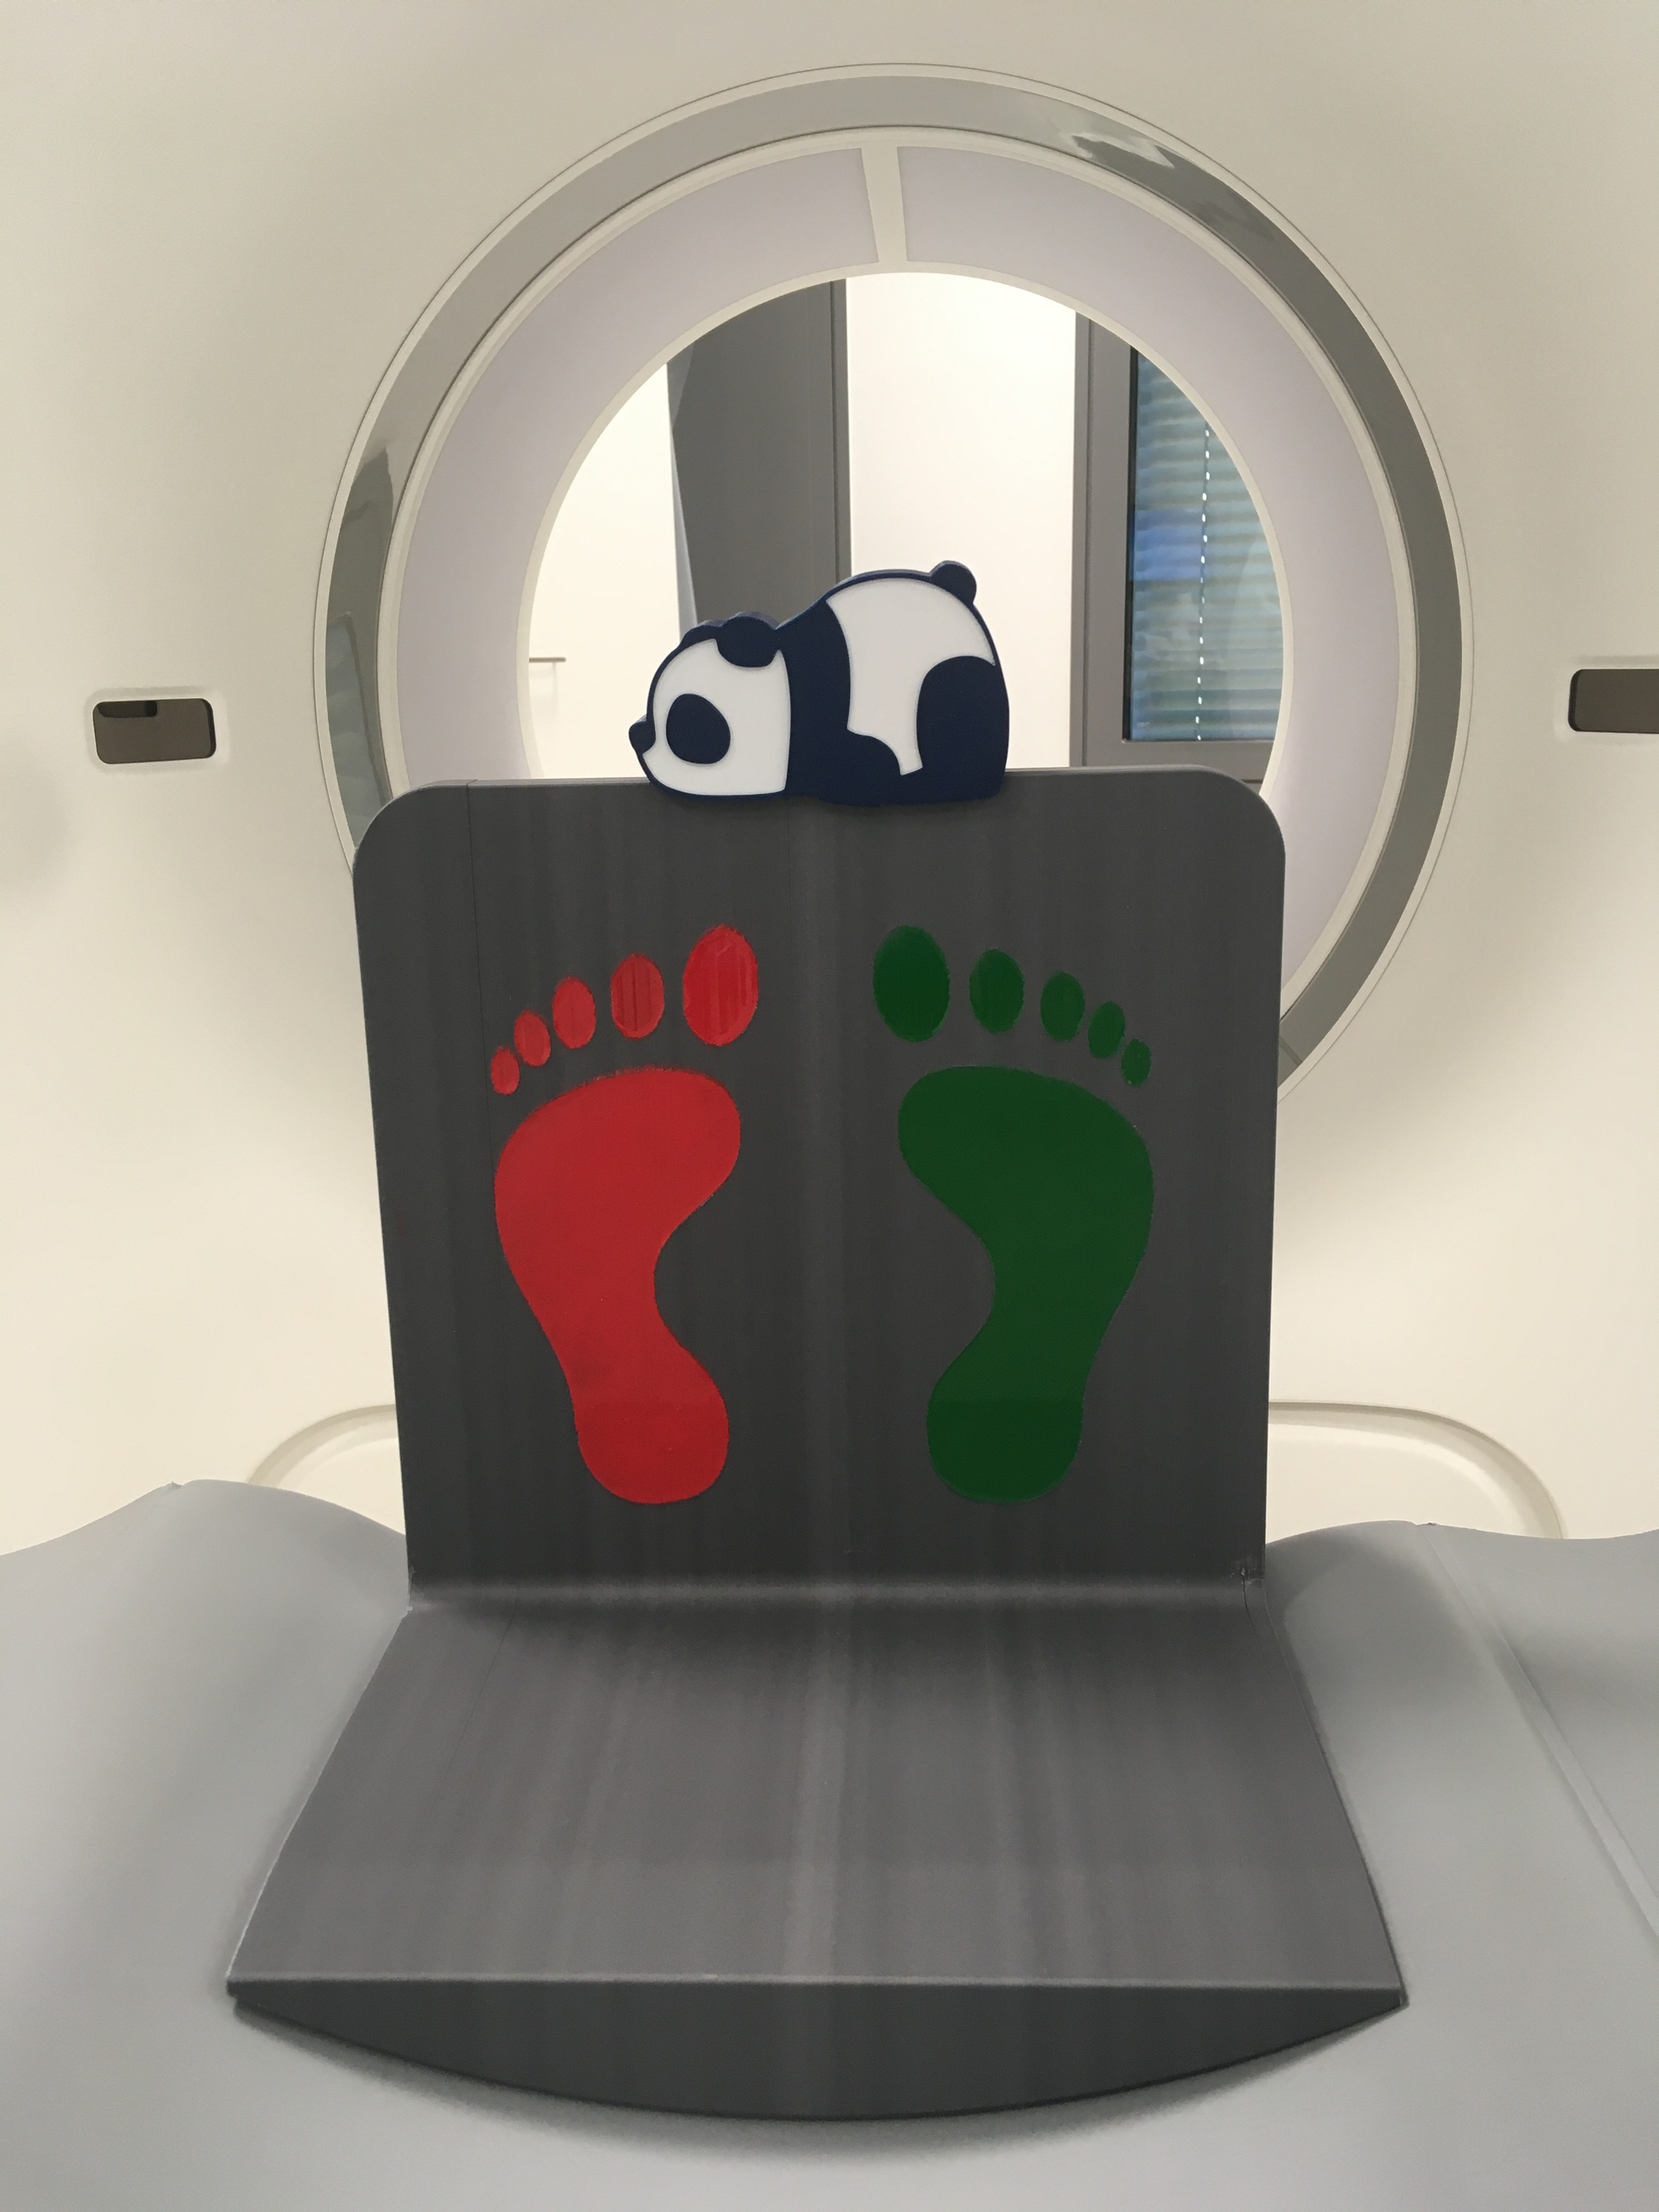 3D printed foot brace- Karolinska University hospital